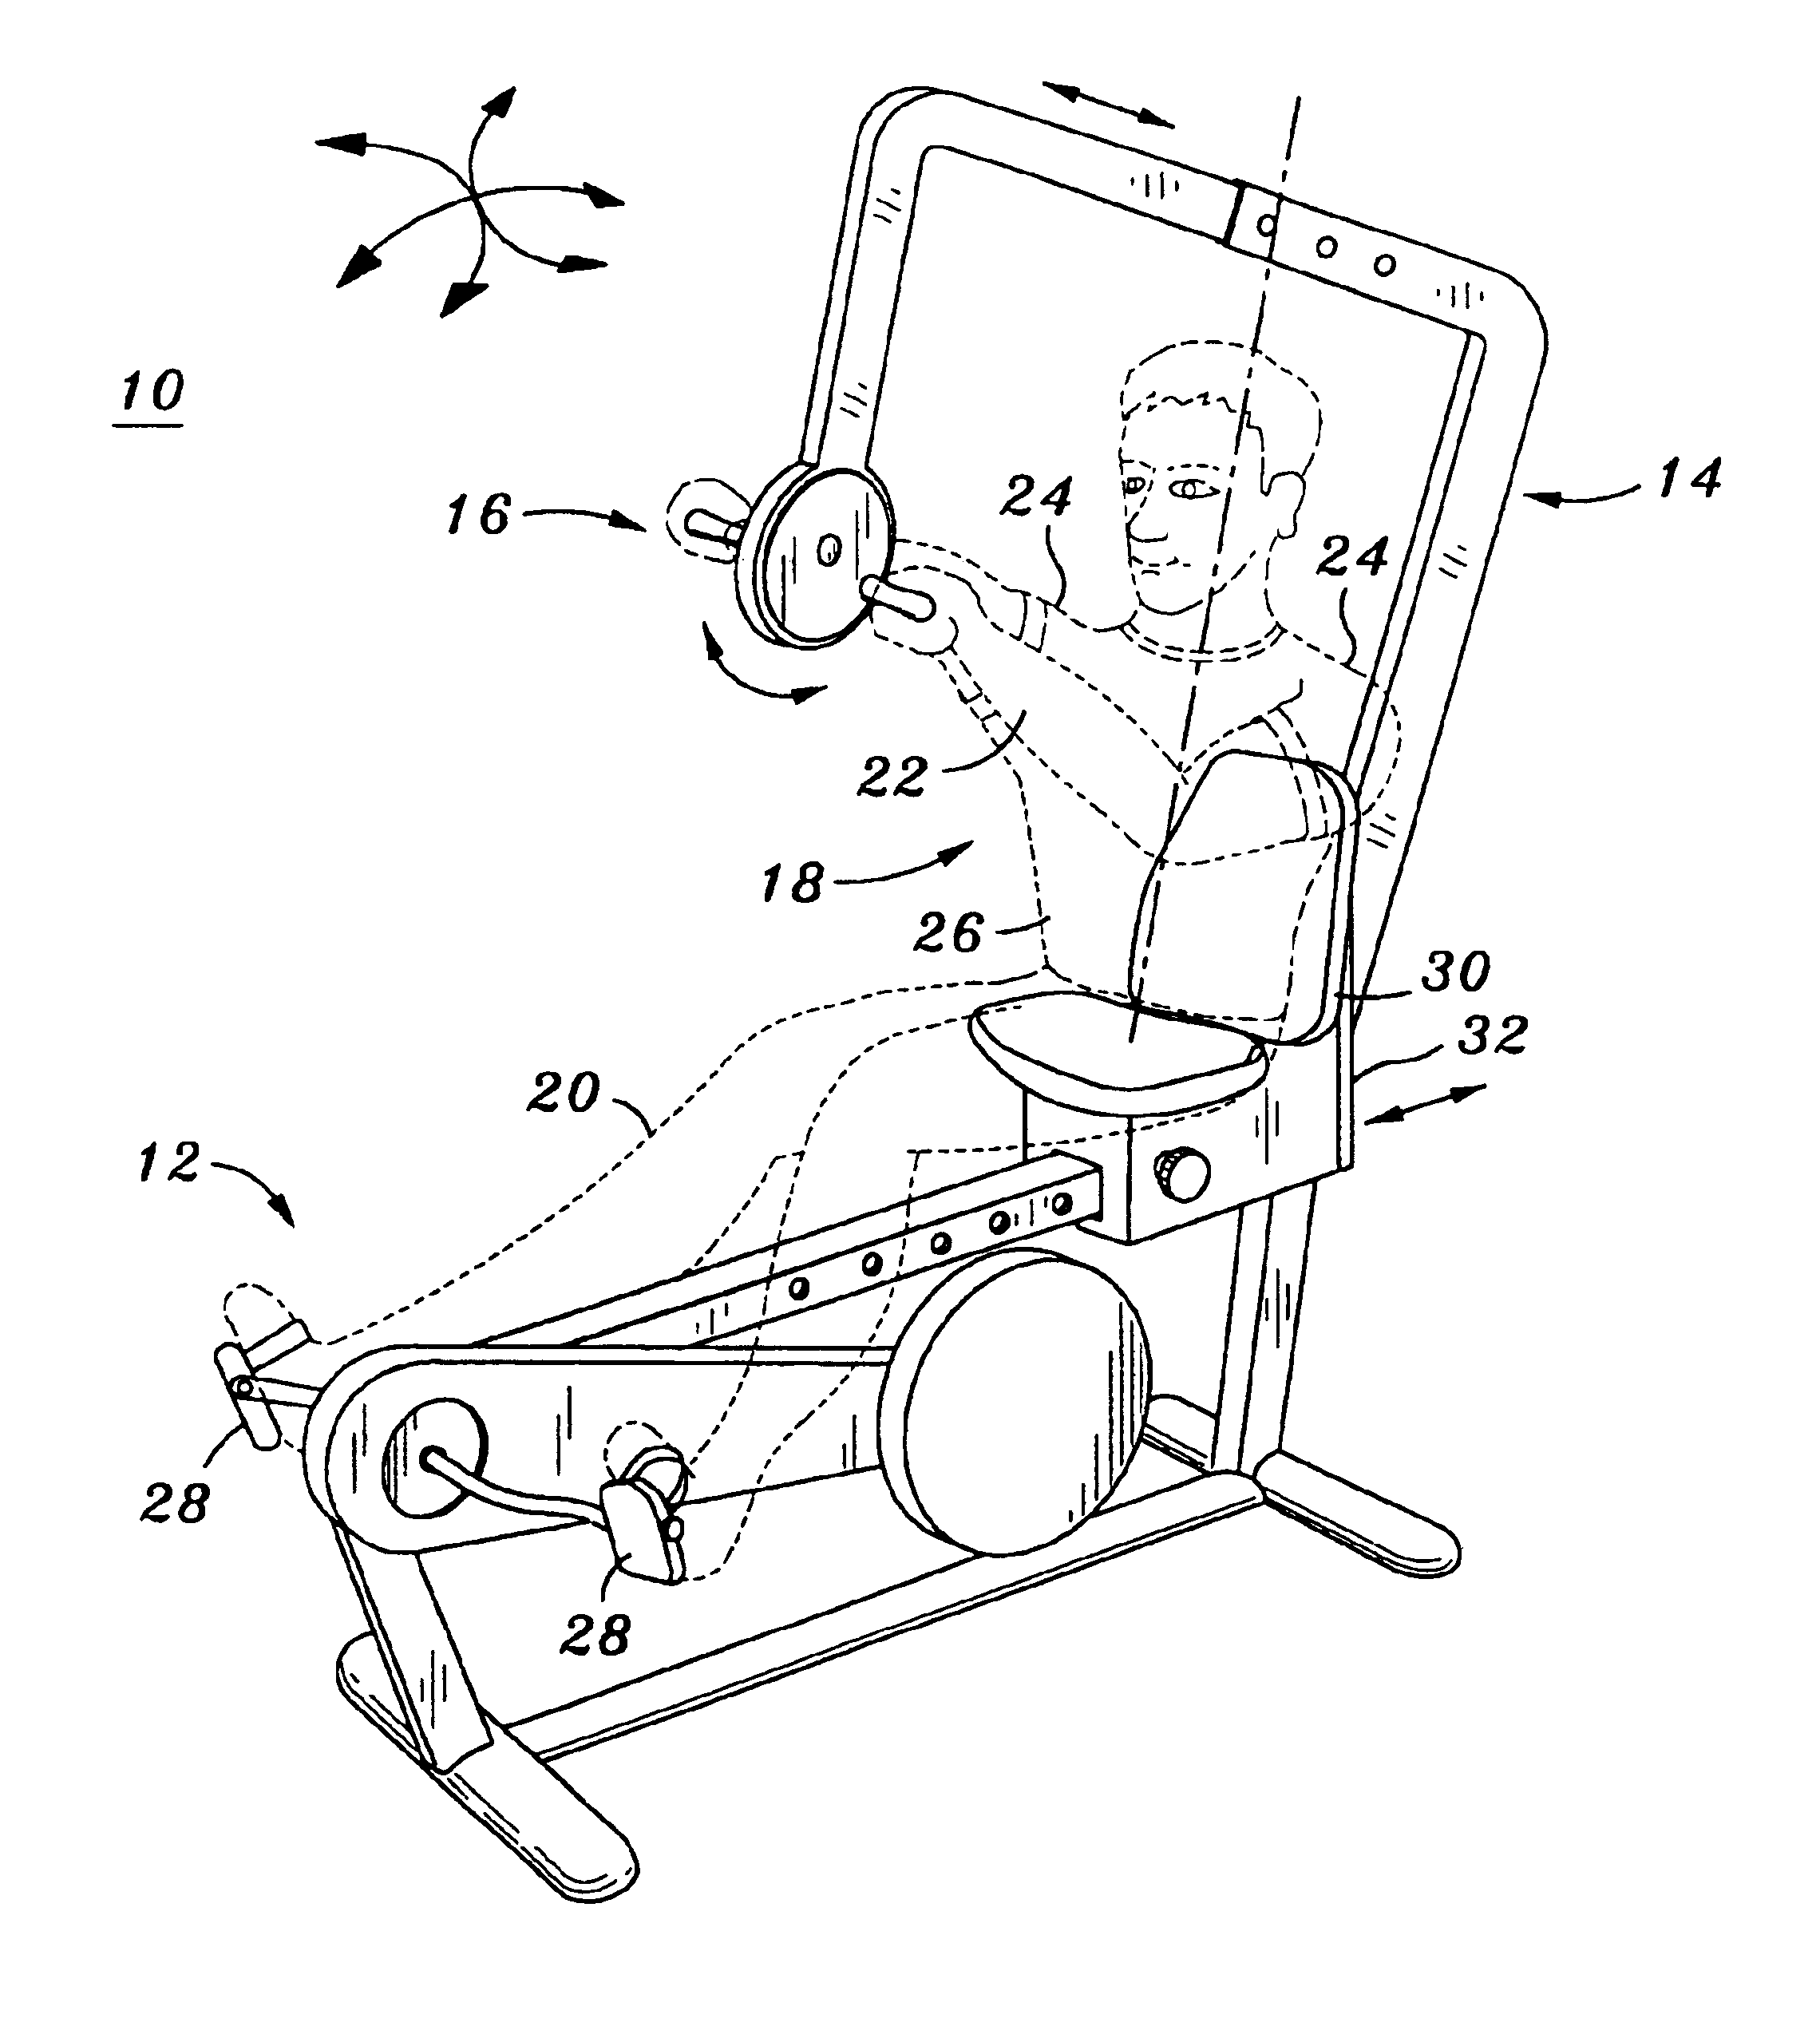 Multi-functional exercise apparatus